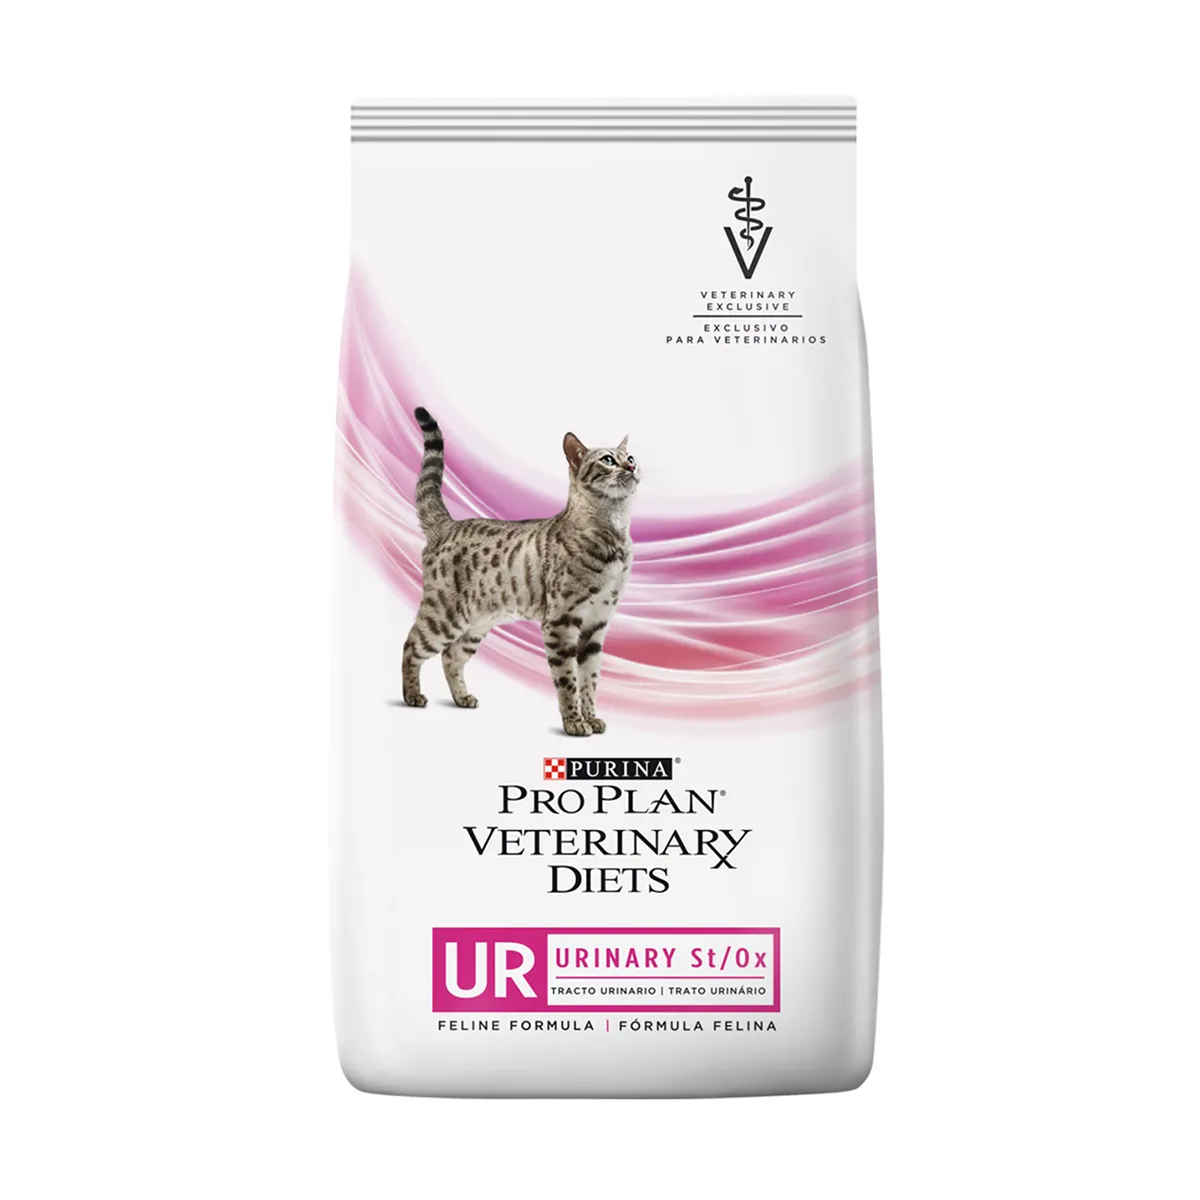 Veterinary-Diets-UR-Urinario-ST-OX-Feline-01